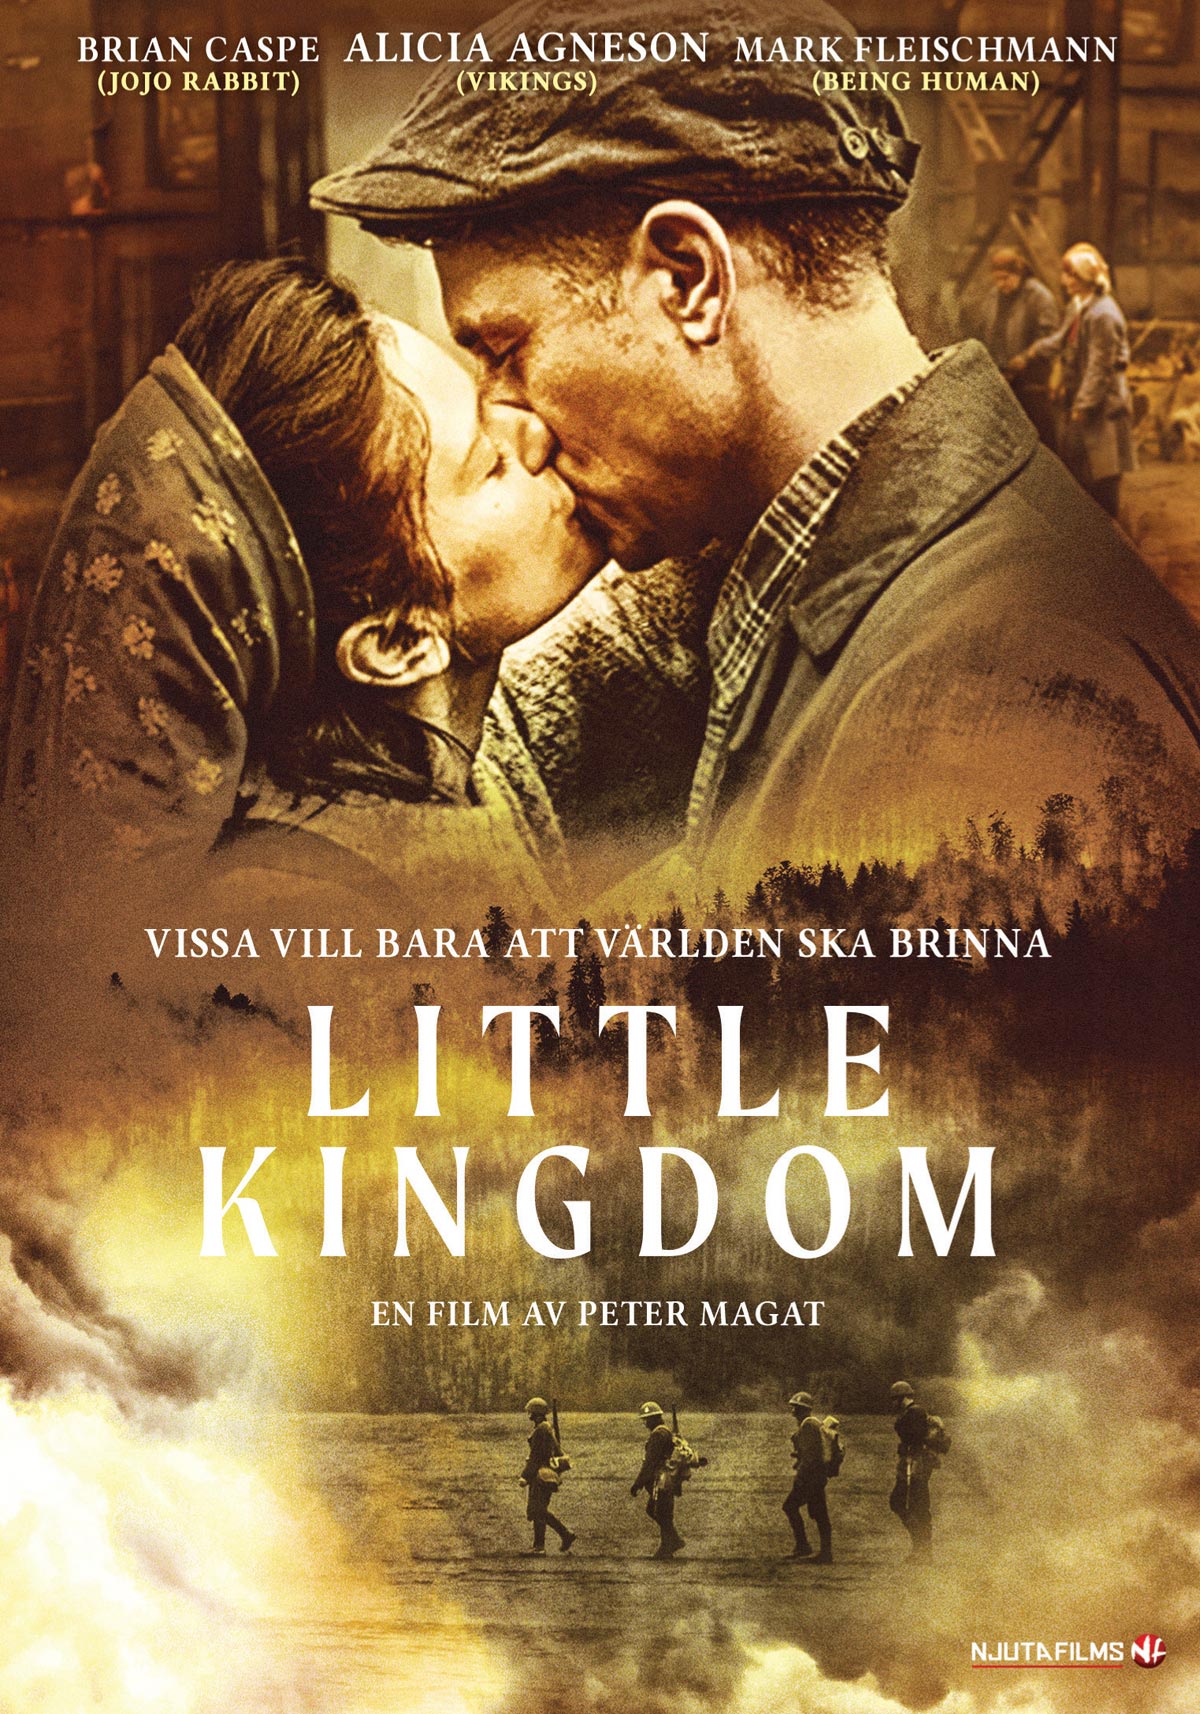 NF 1516 Little Kingdom (DVD)